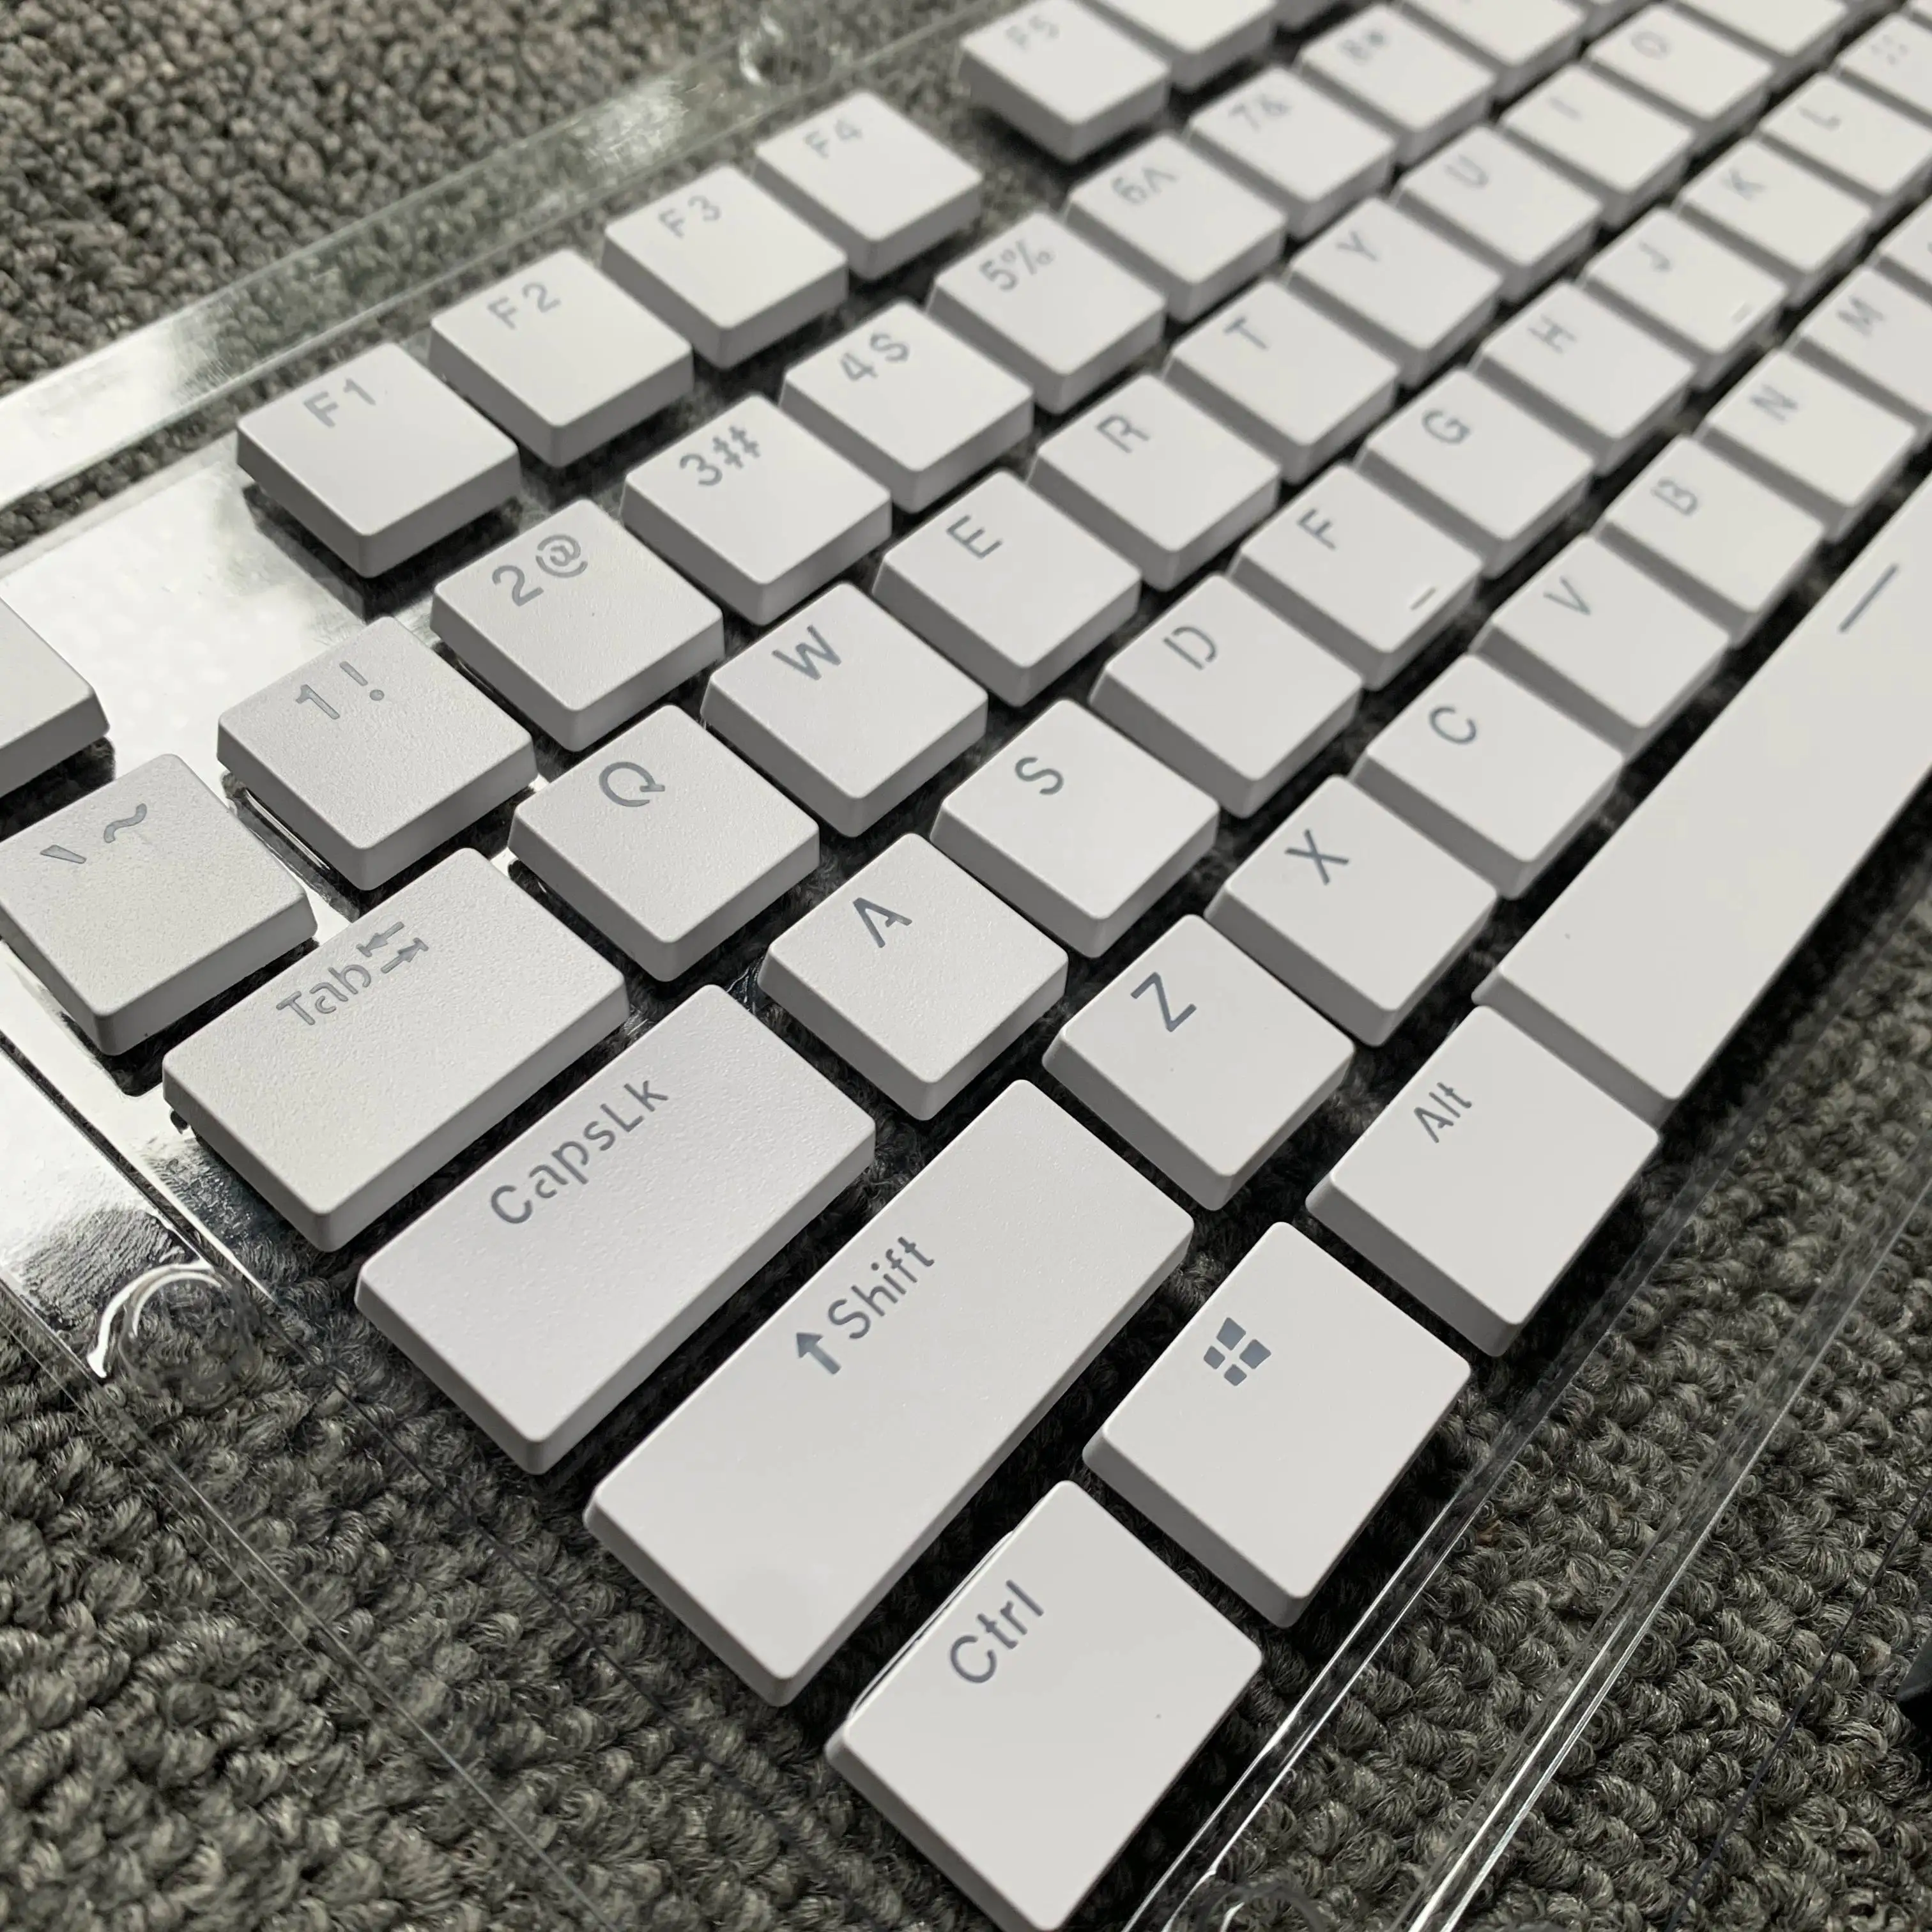 Chocolate Keyboard Style Keycaps,Island-style Keycap Set for Mechanical Keyboard,Chiclet Keyboard,MX stem,Backlit support